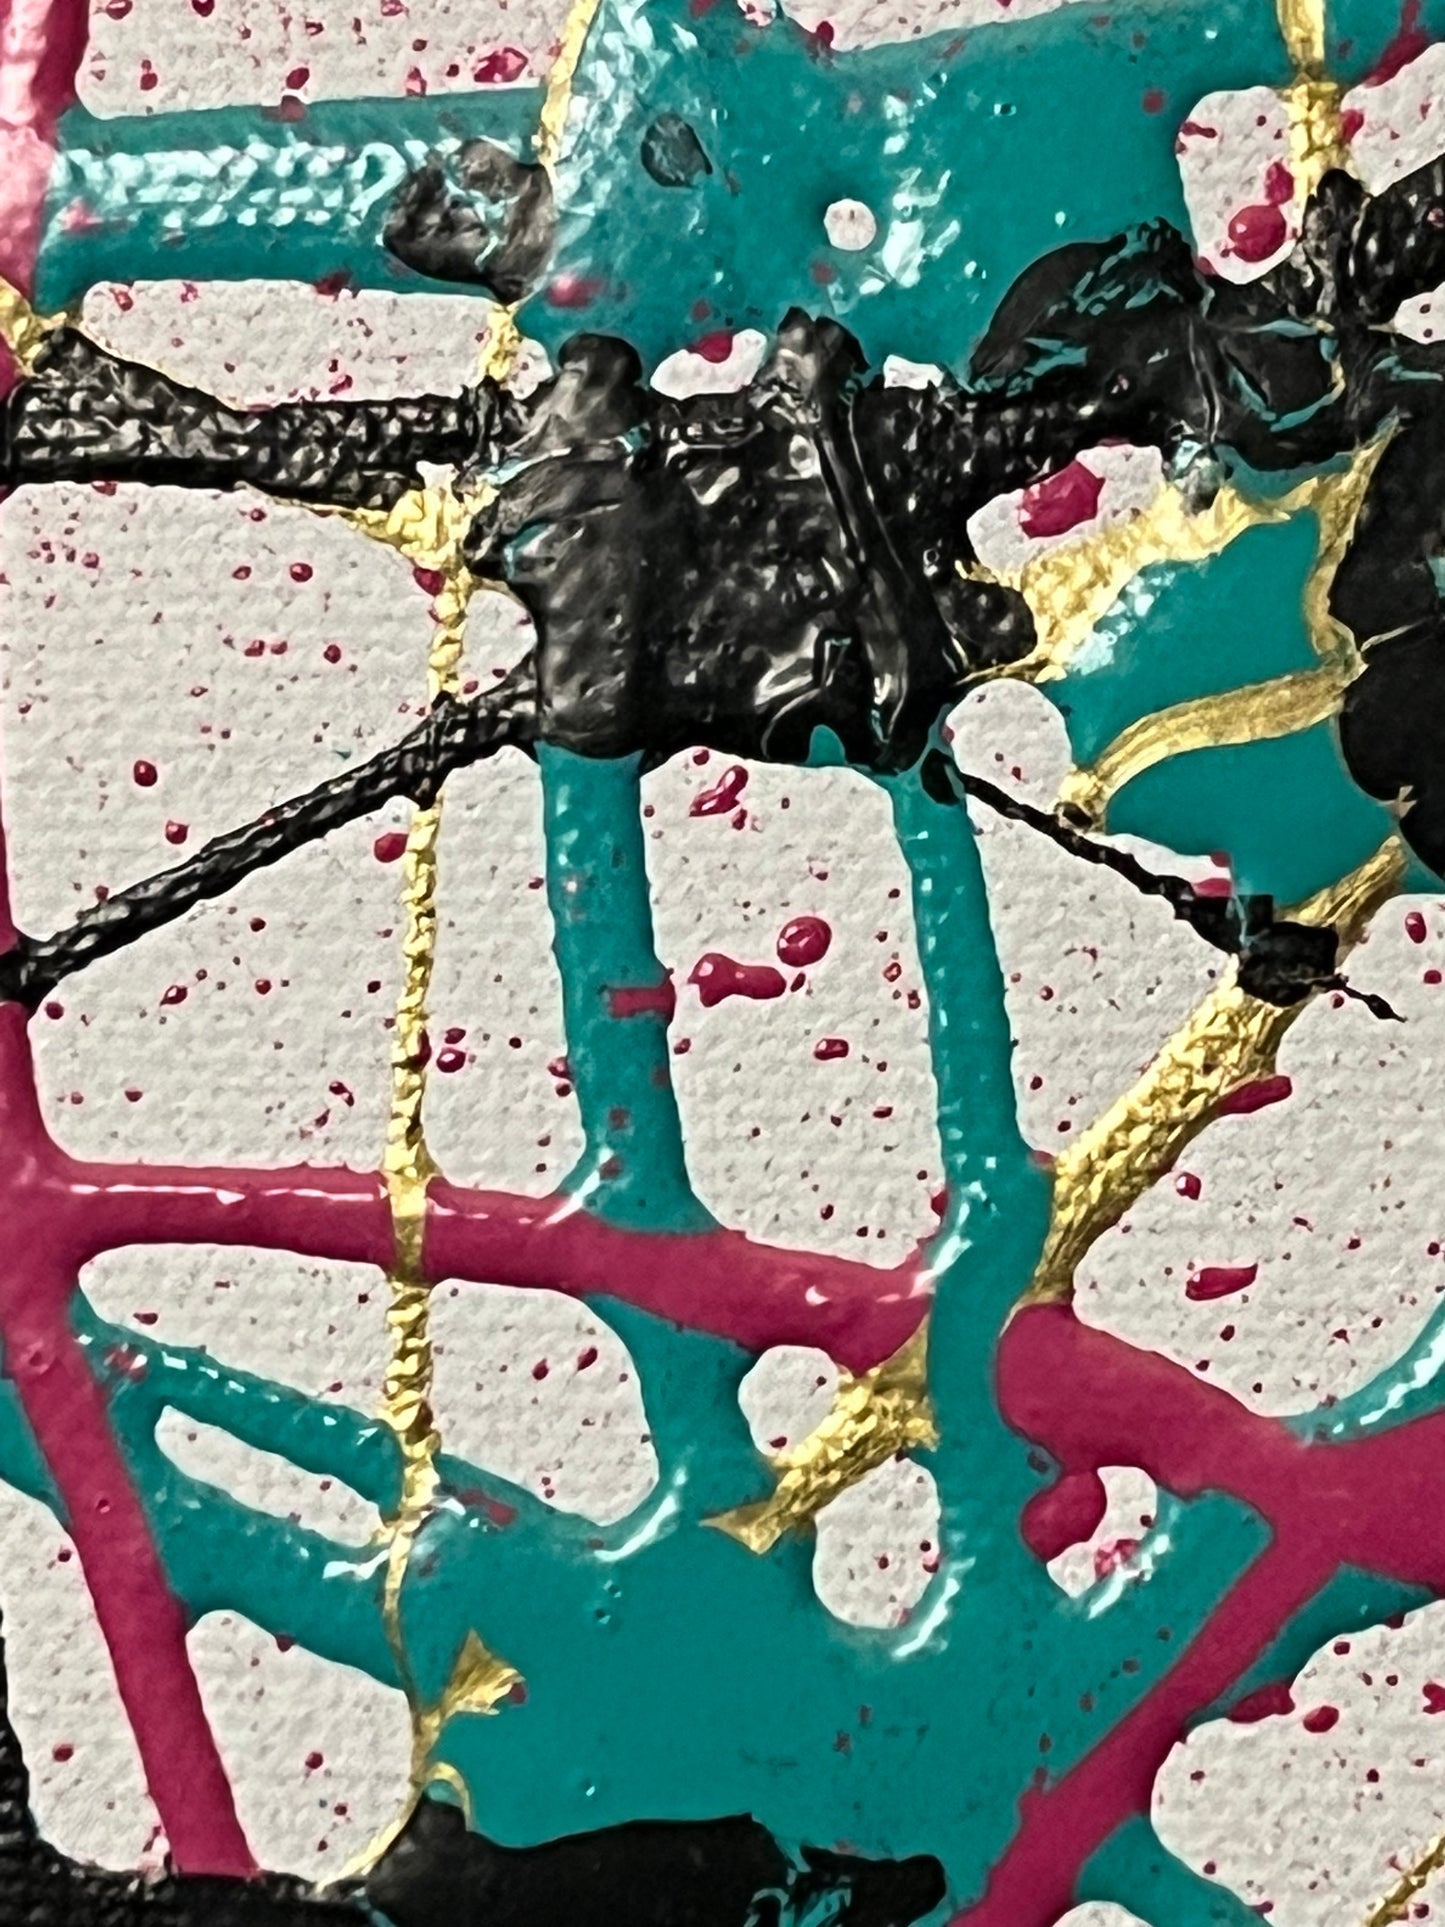 Punk Rock – Acrylic on Canvas